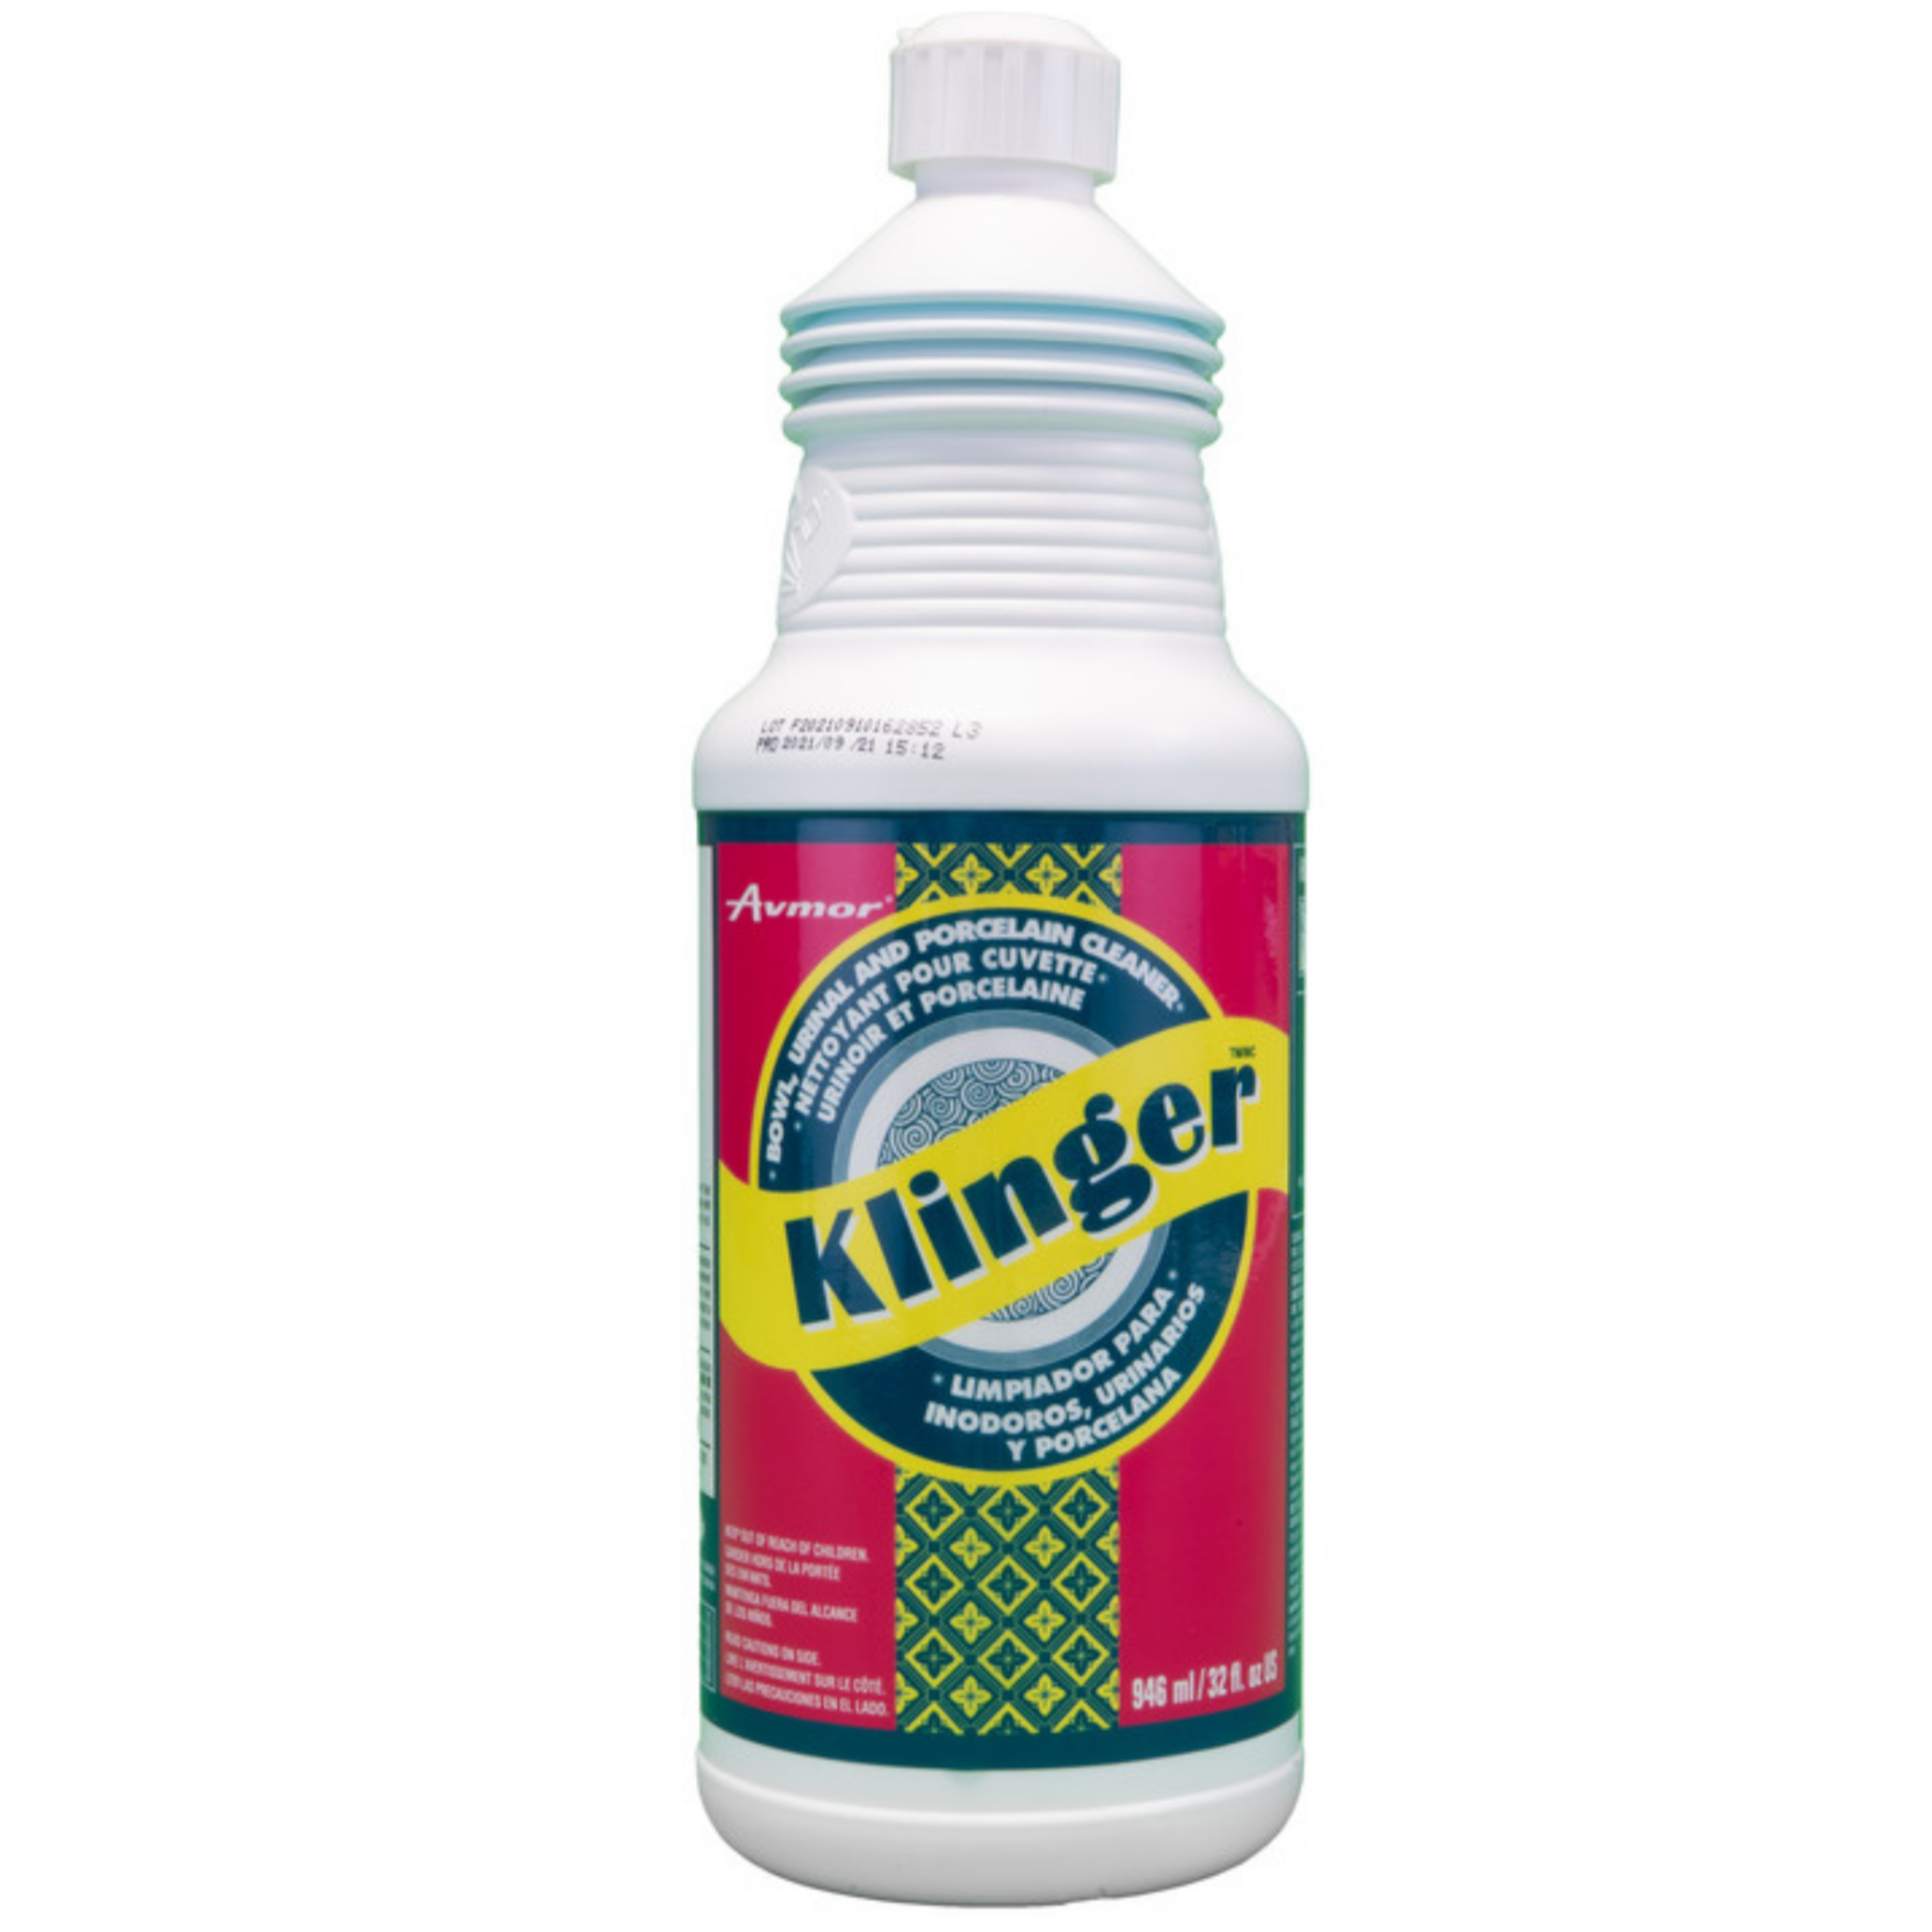 Nettoyant pour cuvettes, urinoirs et porcelaines - Klinger - Avmor